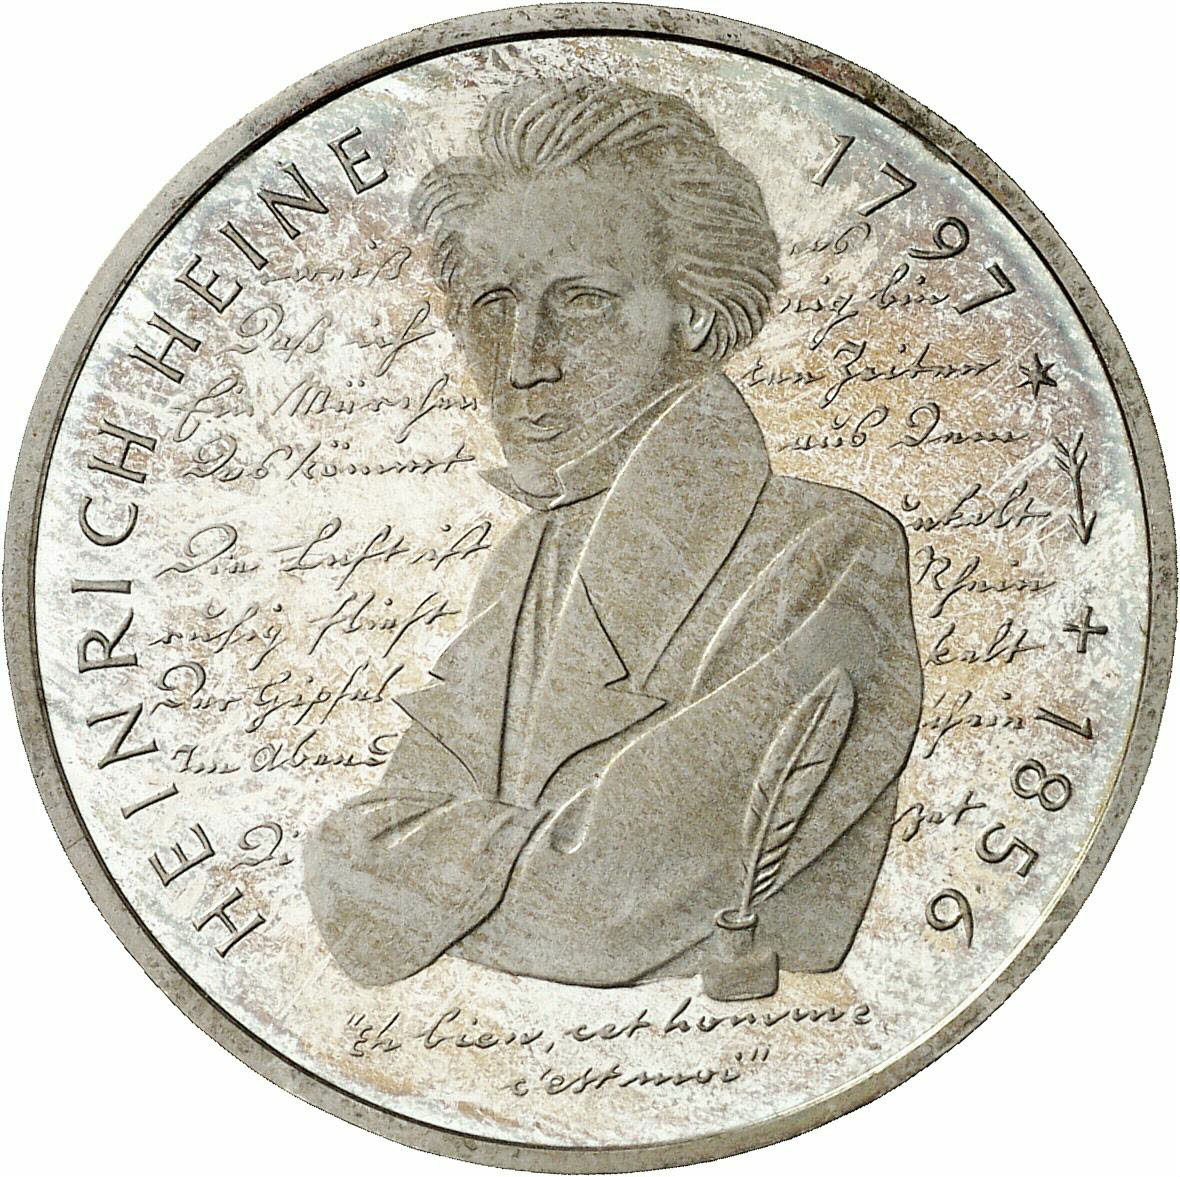 DE 10 Deutsche Mark 1997 A